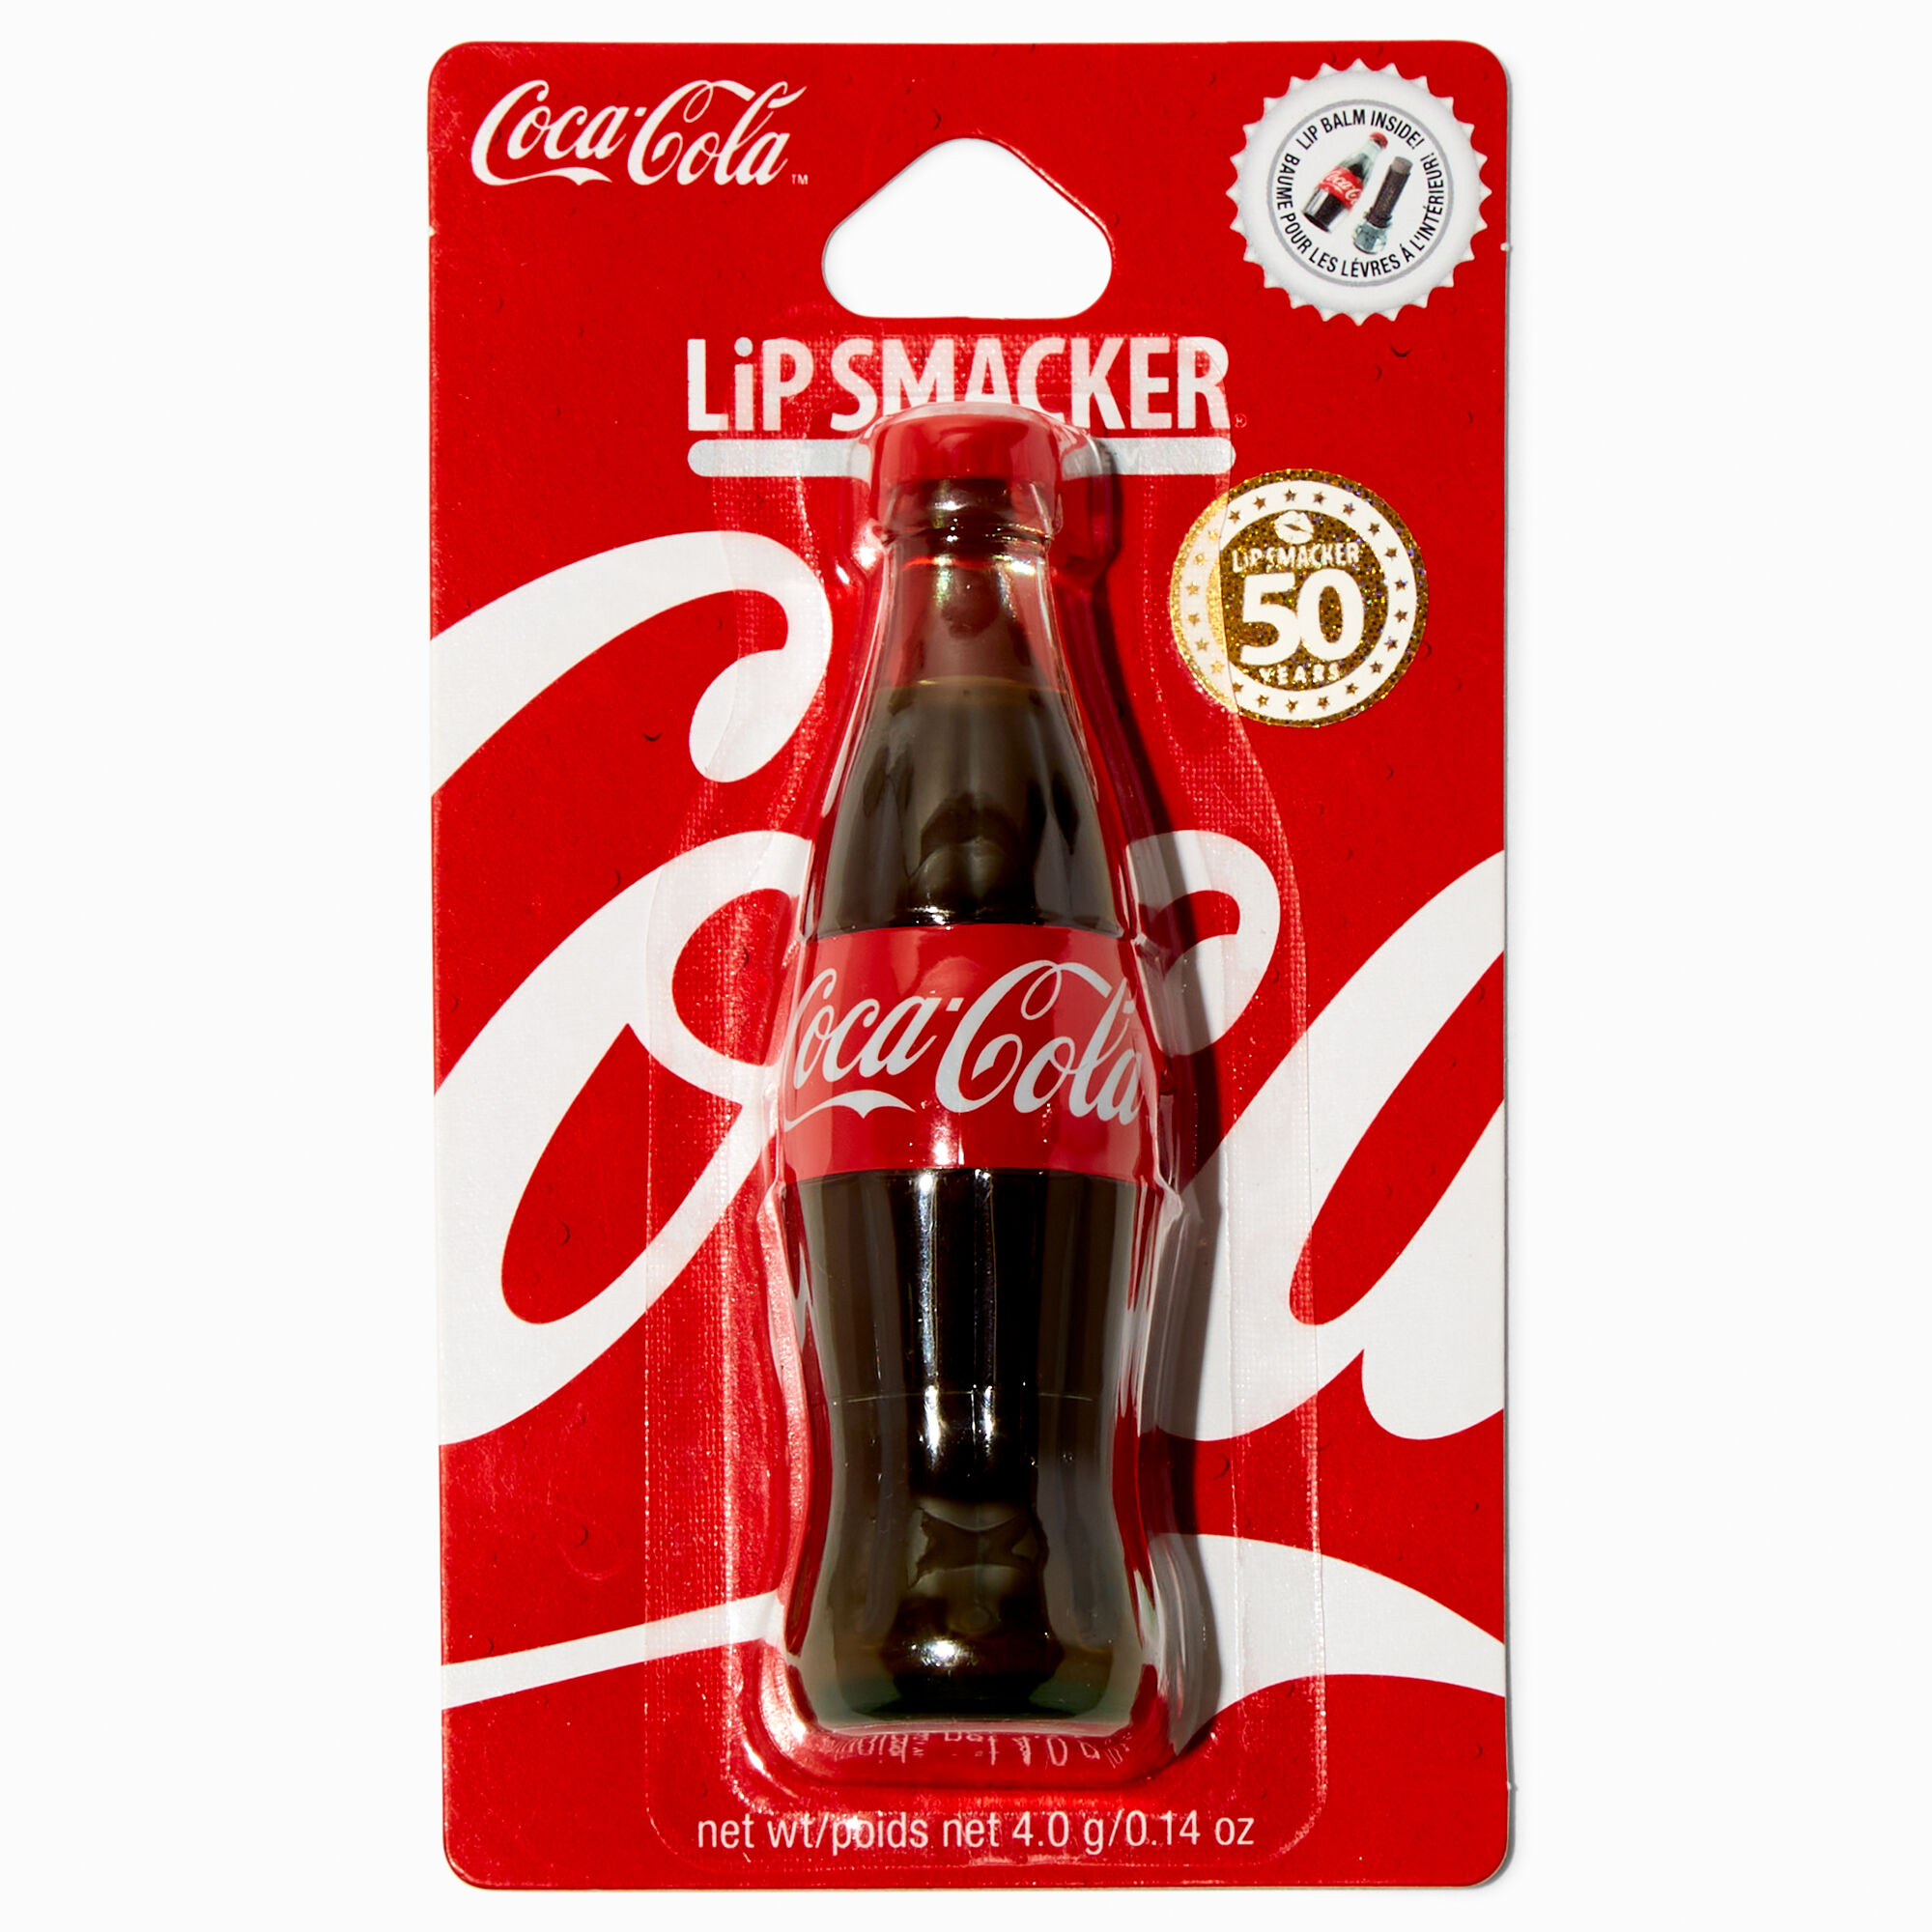 View Claires Lip Smacker CocaCola Bottle Balm information